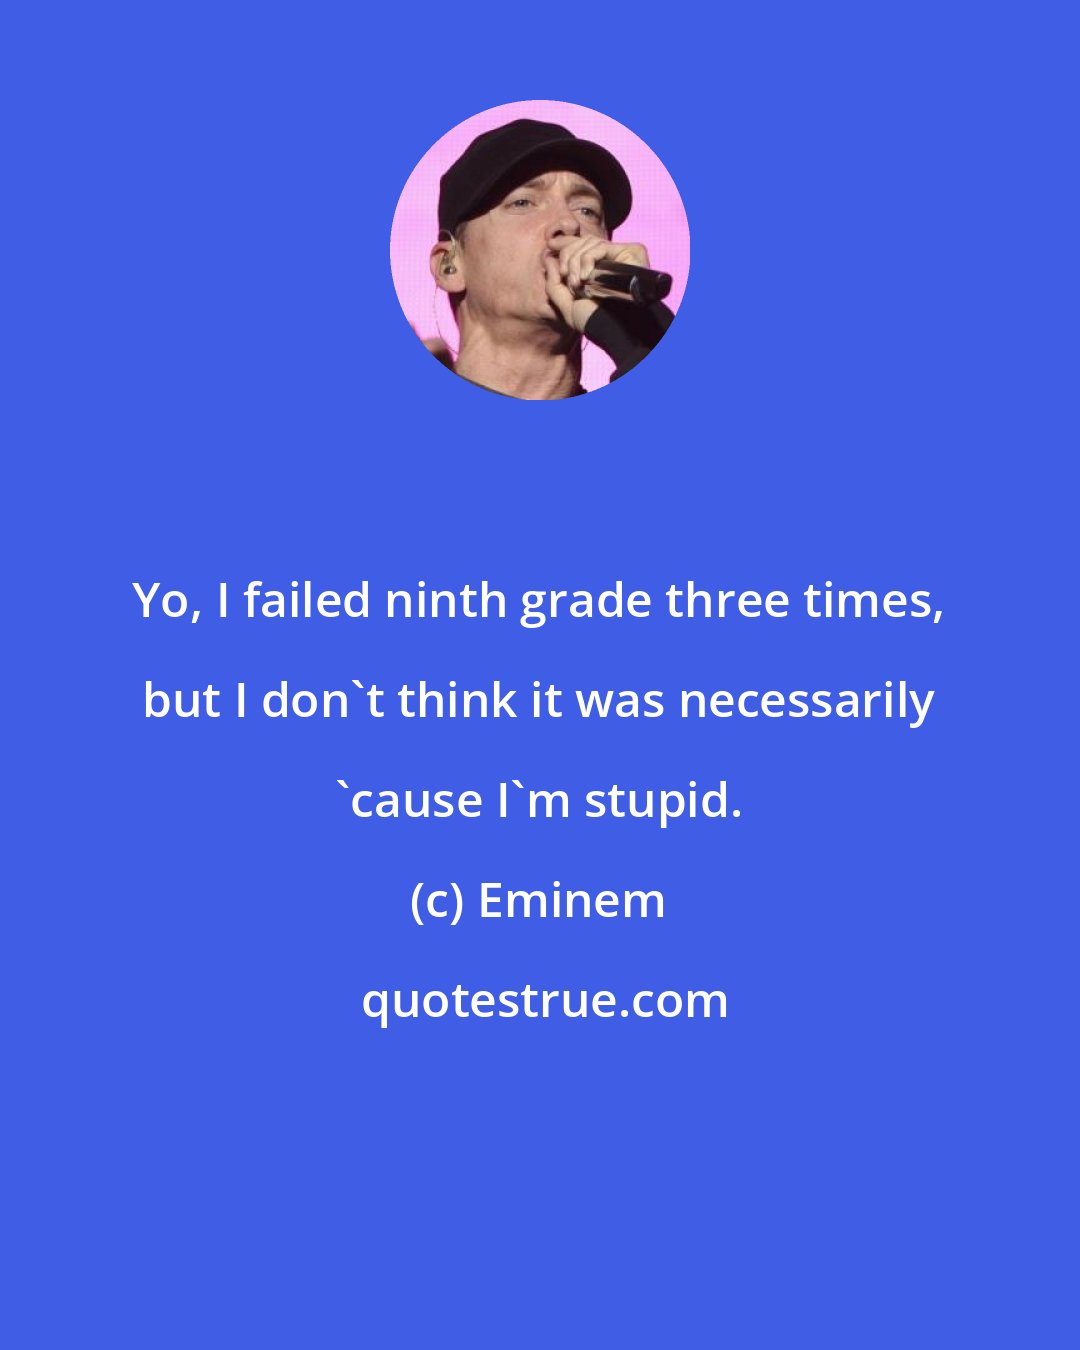 Eminem: Yo, I failed ninth grade three times, but I don't think it was necessarily 'cause I'm stupid.